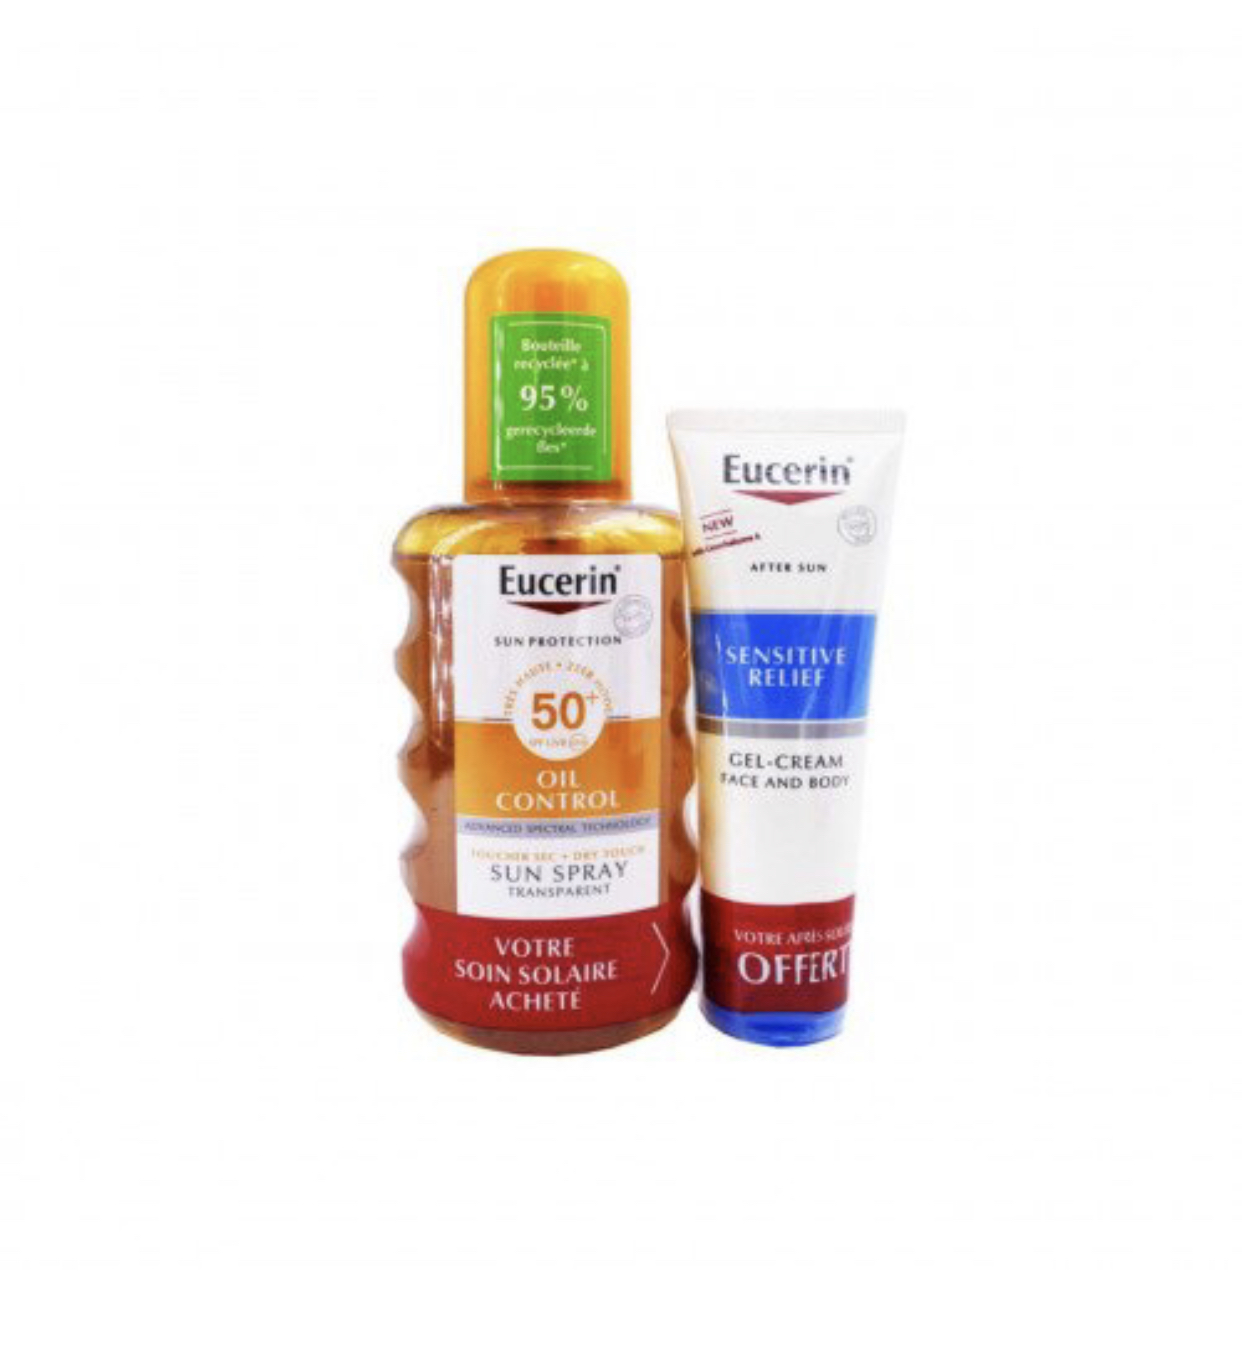 Eucerin Sun Gel-Cream Oil Control SPF 50 for Oily Skin - 50 ml - كريم